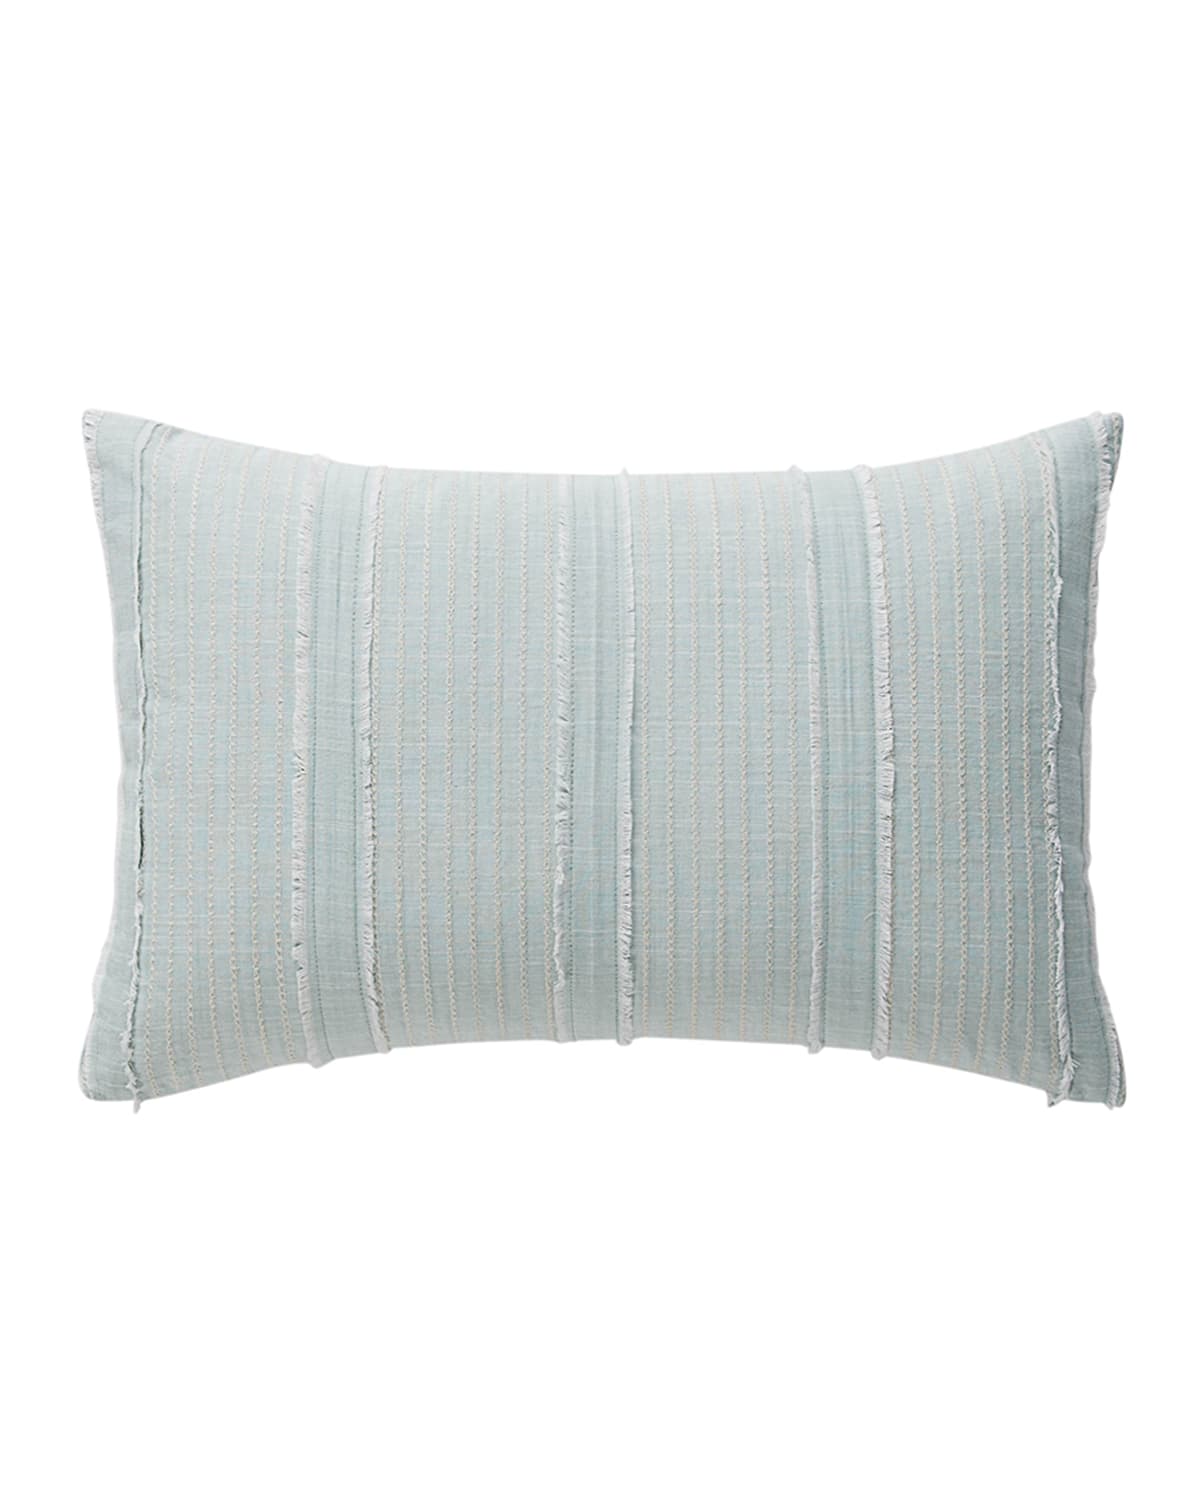 Image Waterford Gloria Decorative Pillow